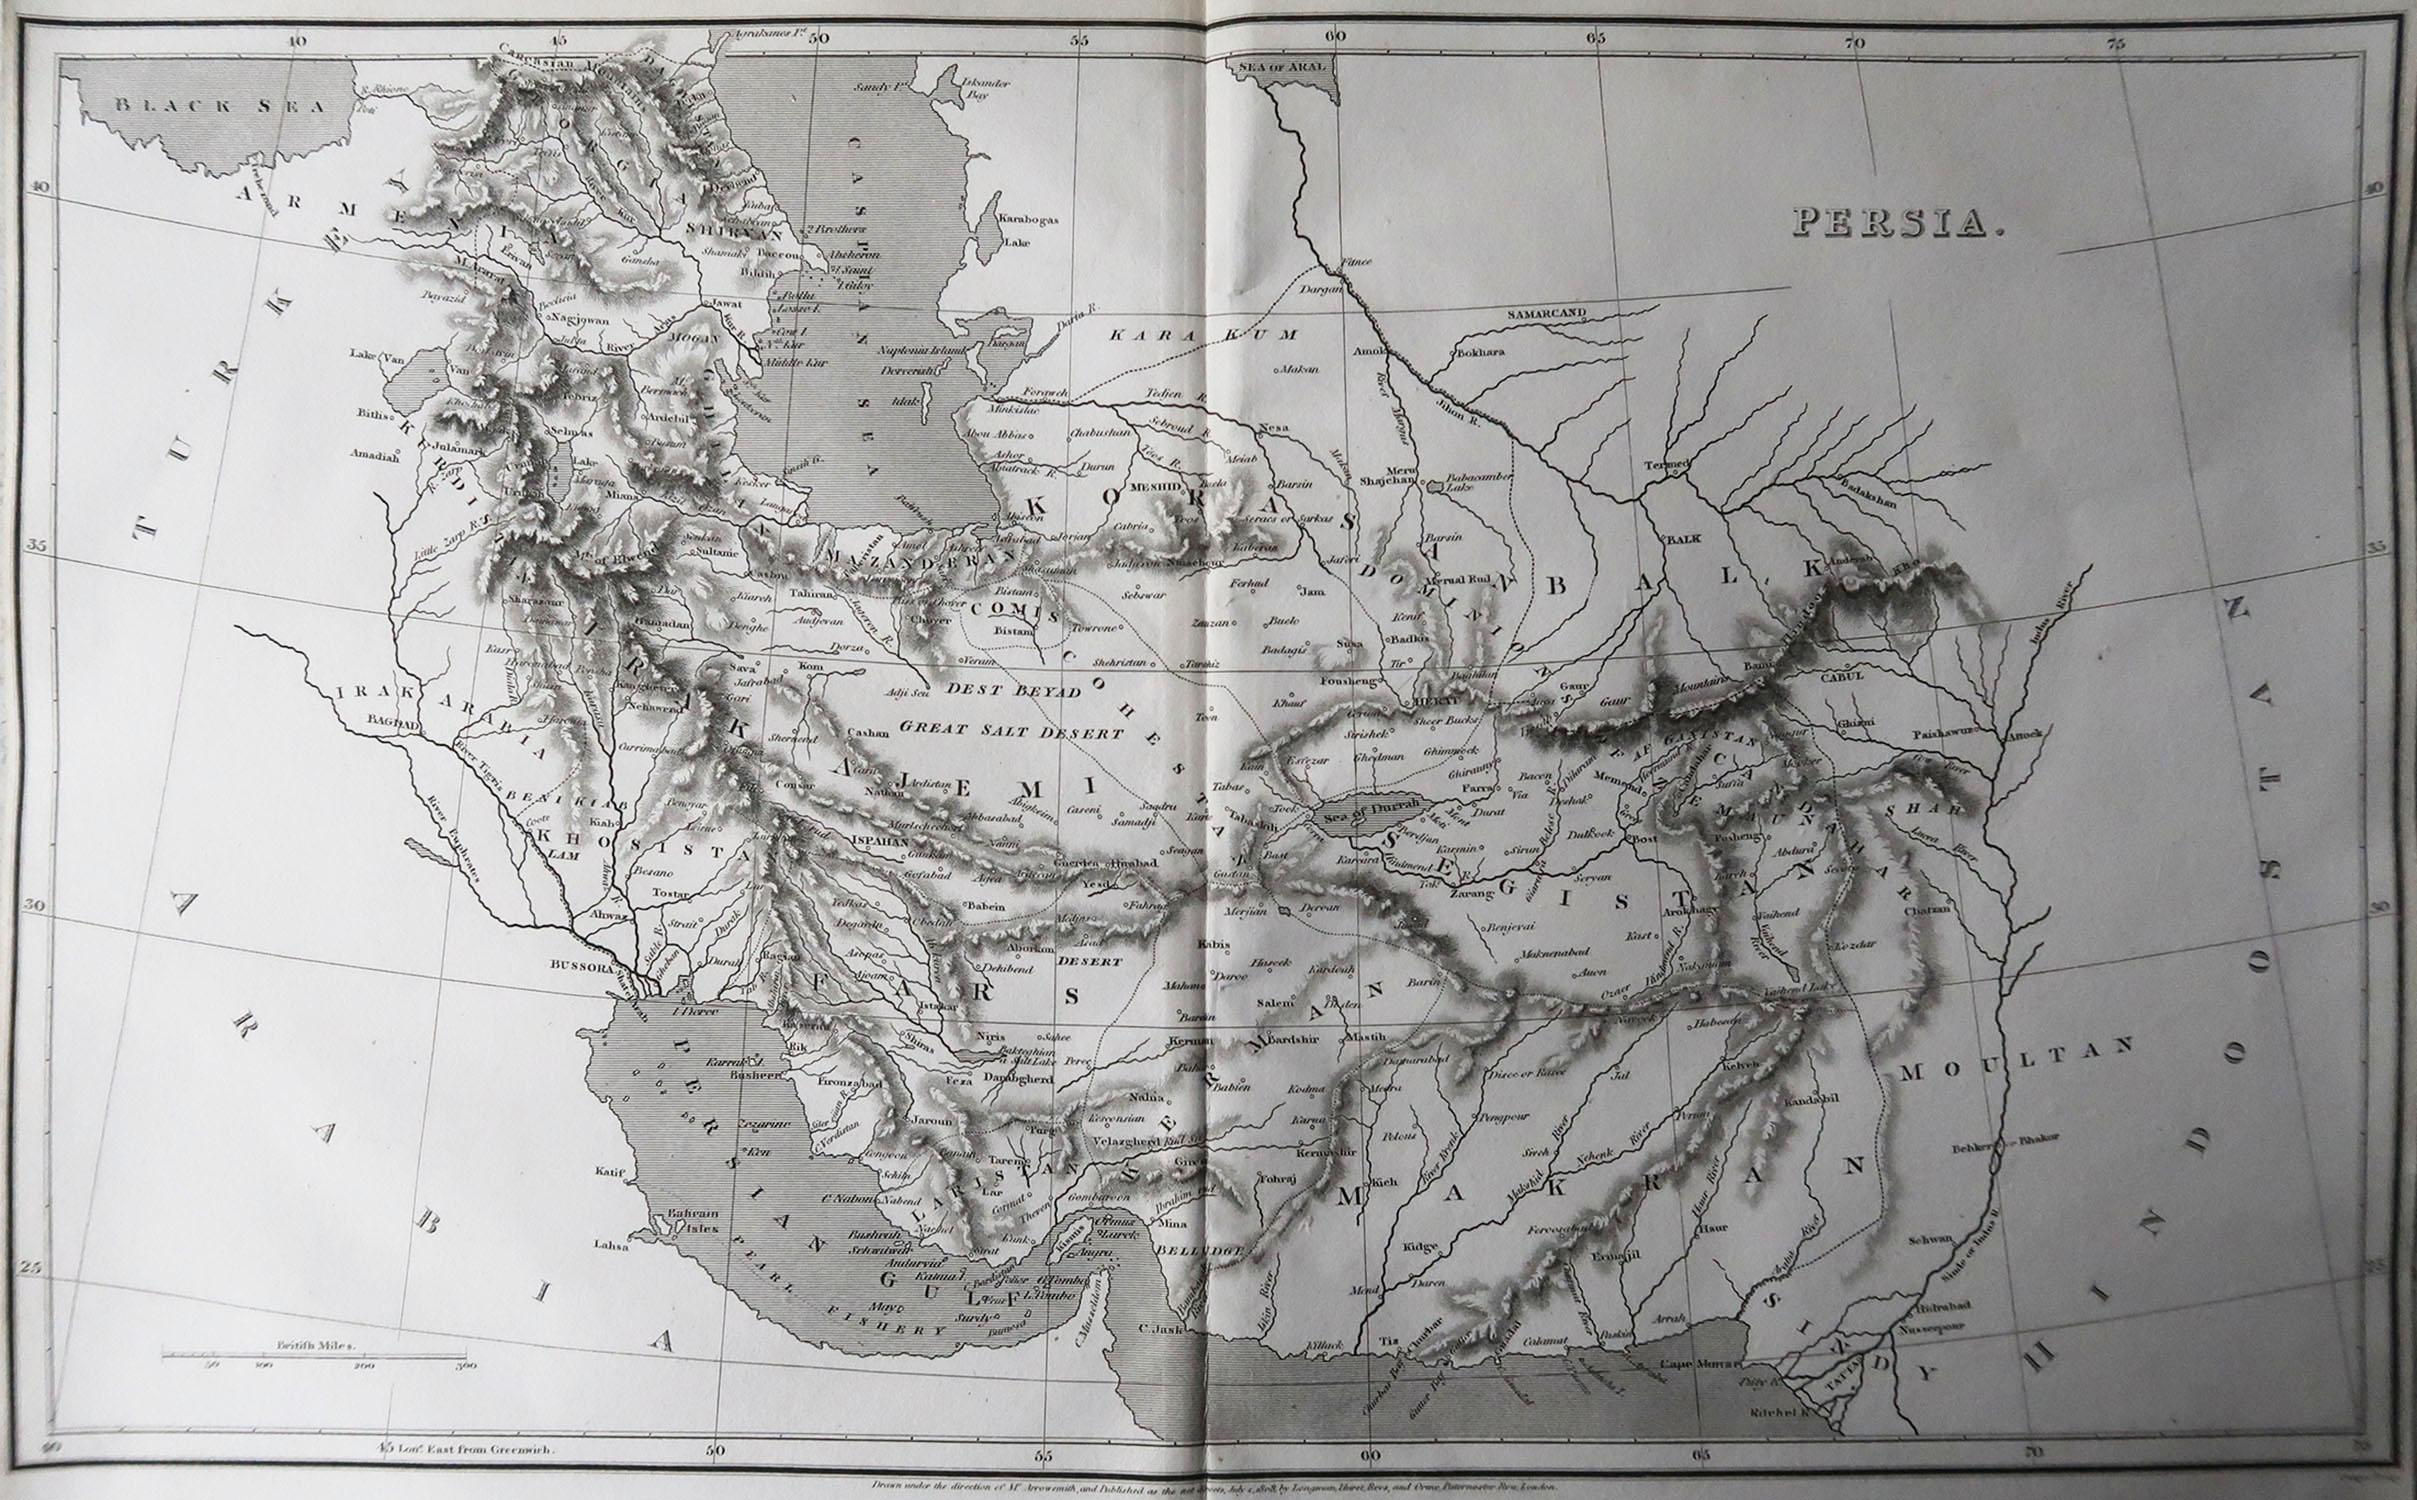 English Original Antique Map of Persia / Iran, Arrowsmith, 1820